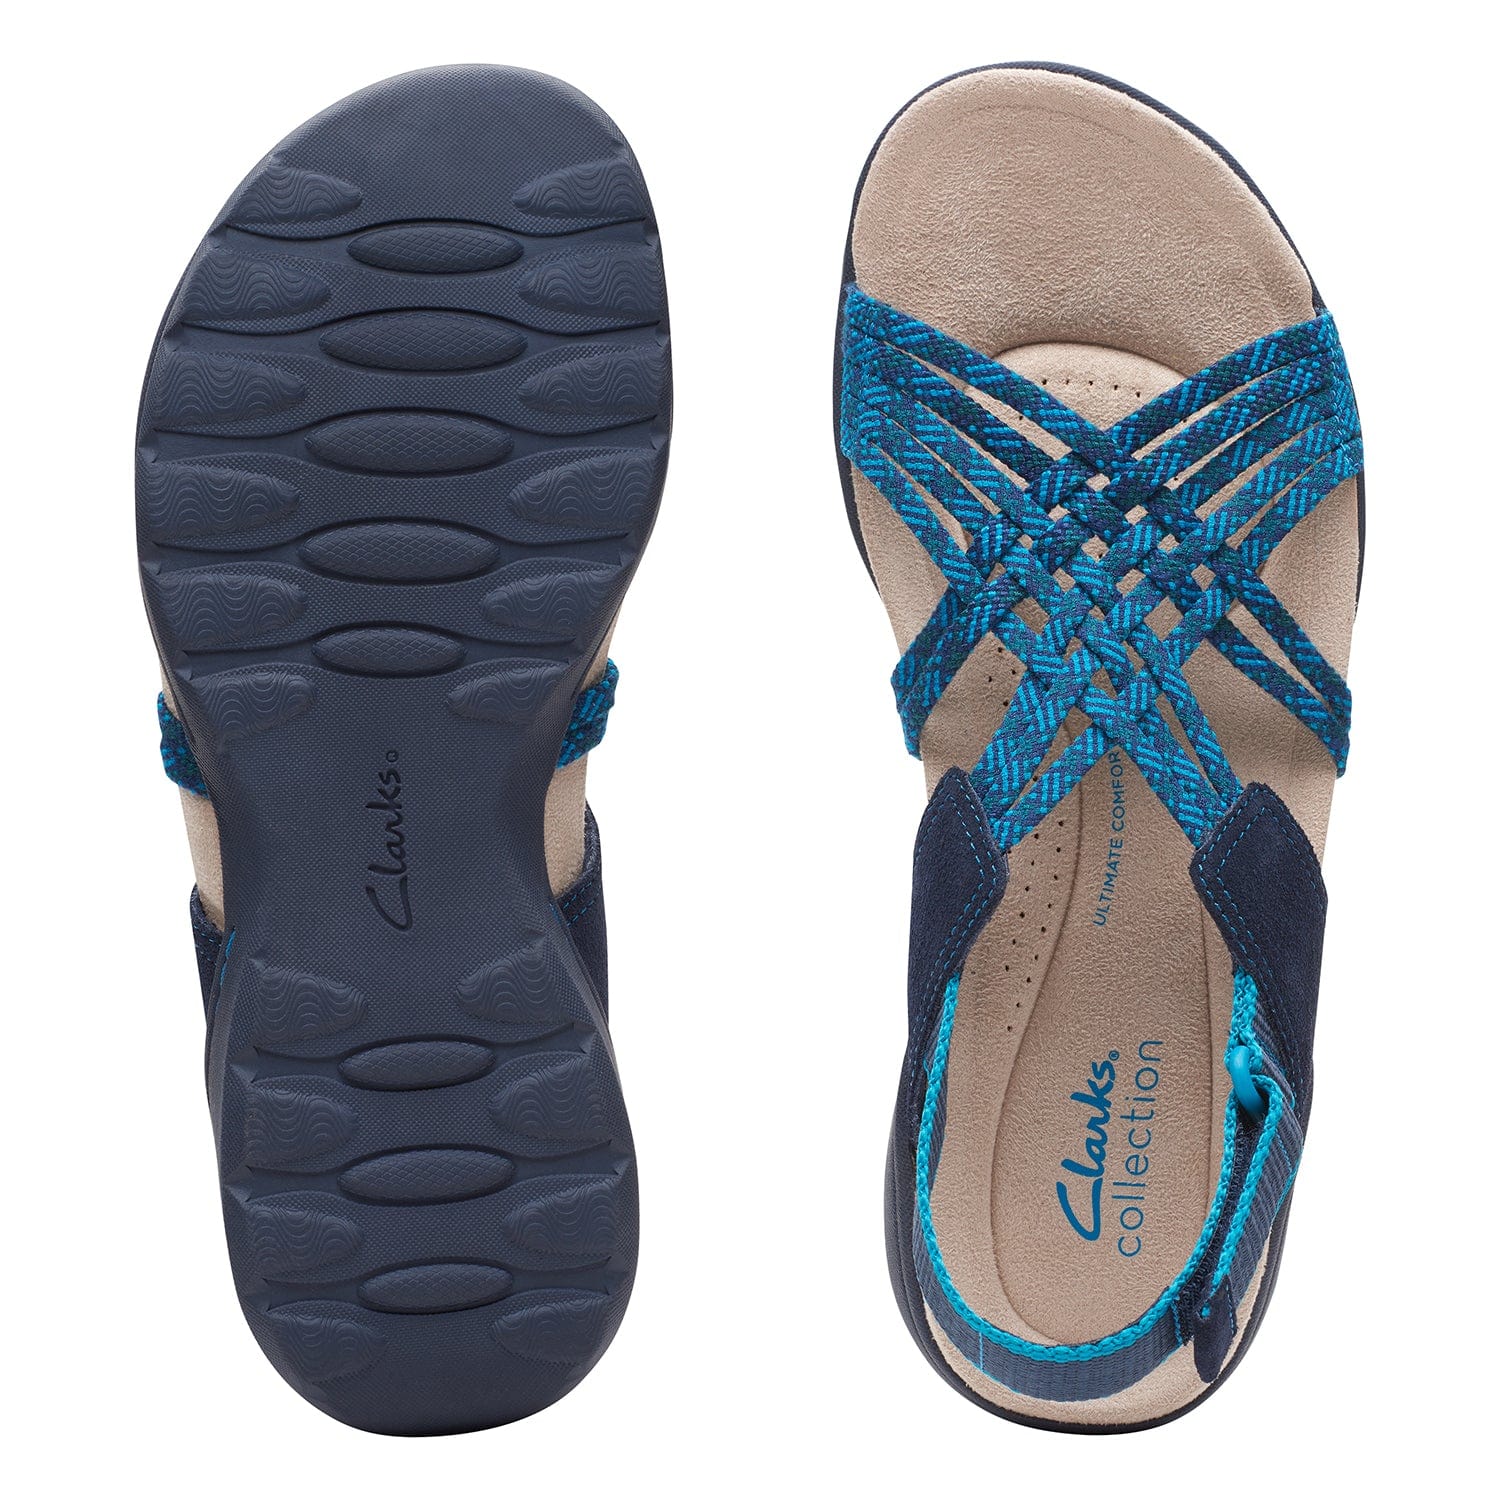 Clarks Amanda Ease Sandals - Navy Combi - 261651704 - D Width (Standard Fit)